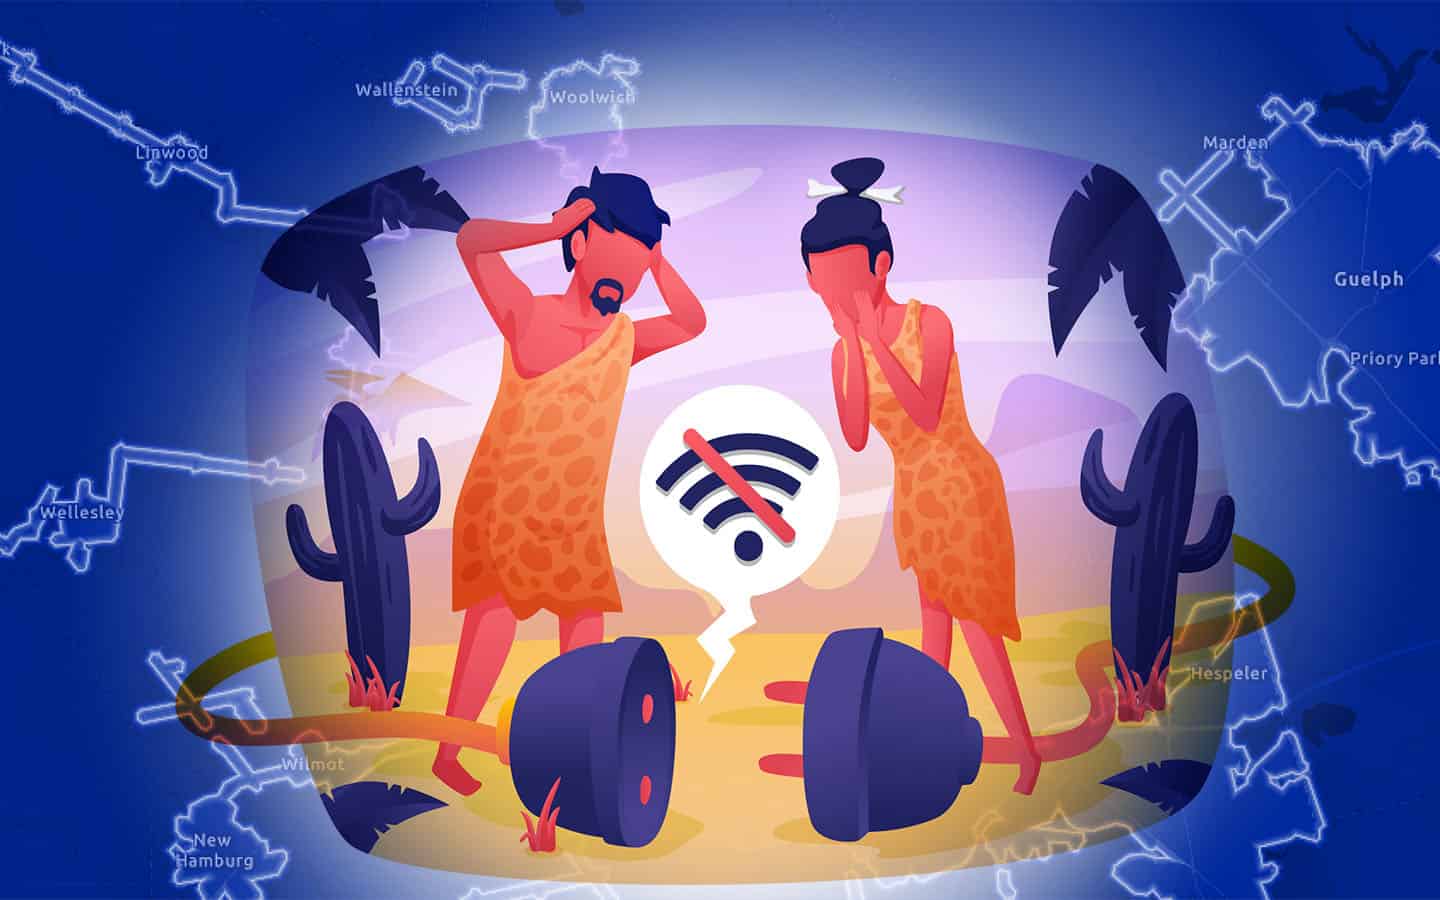 Boosting broadband access